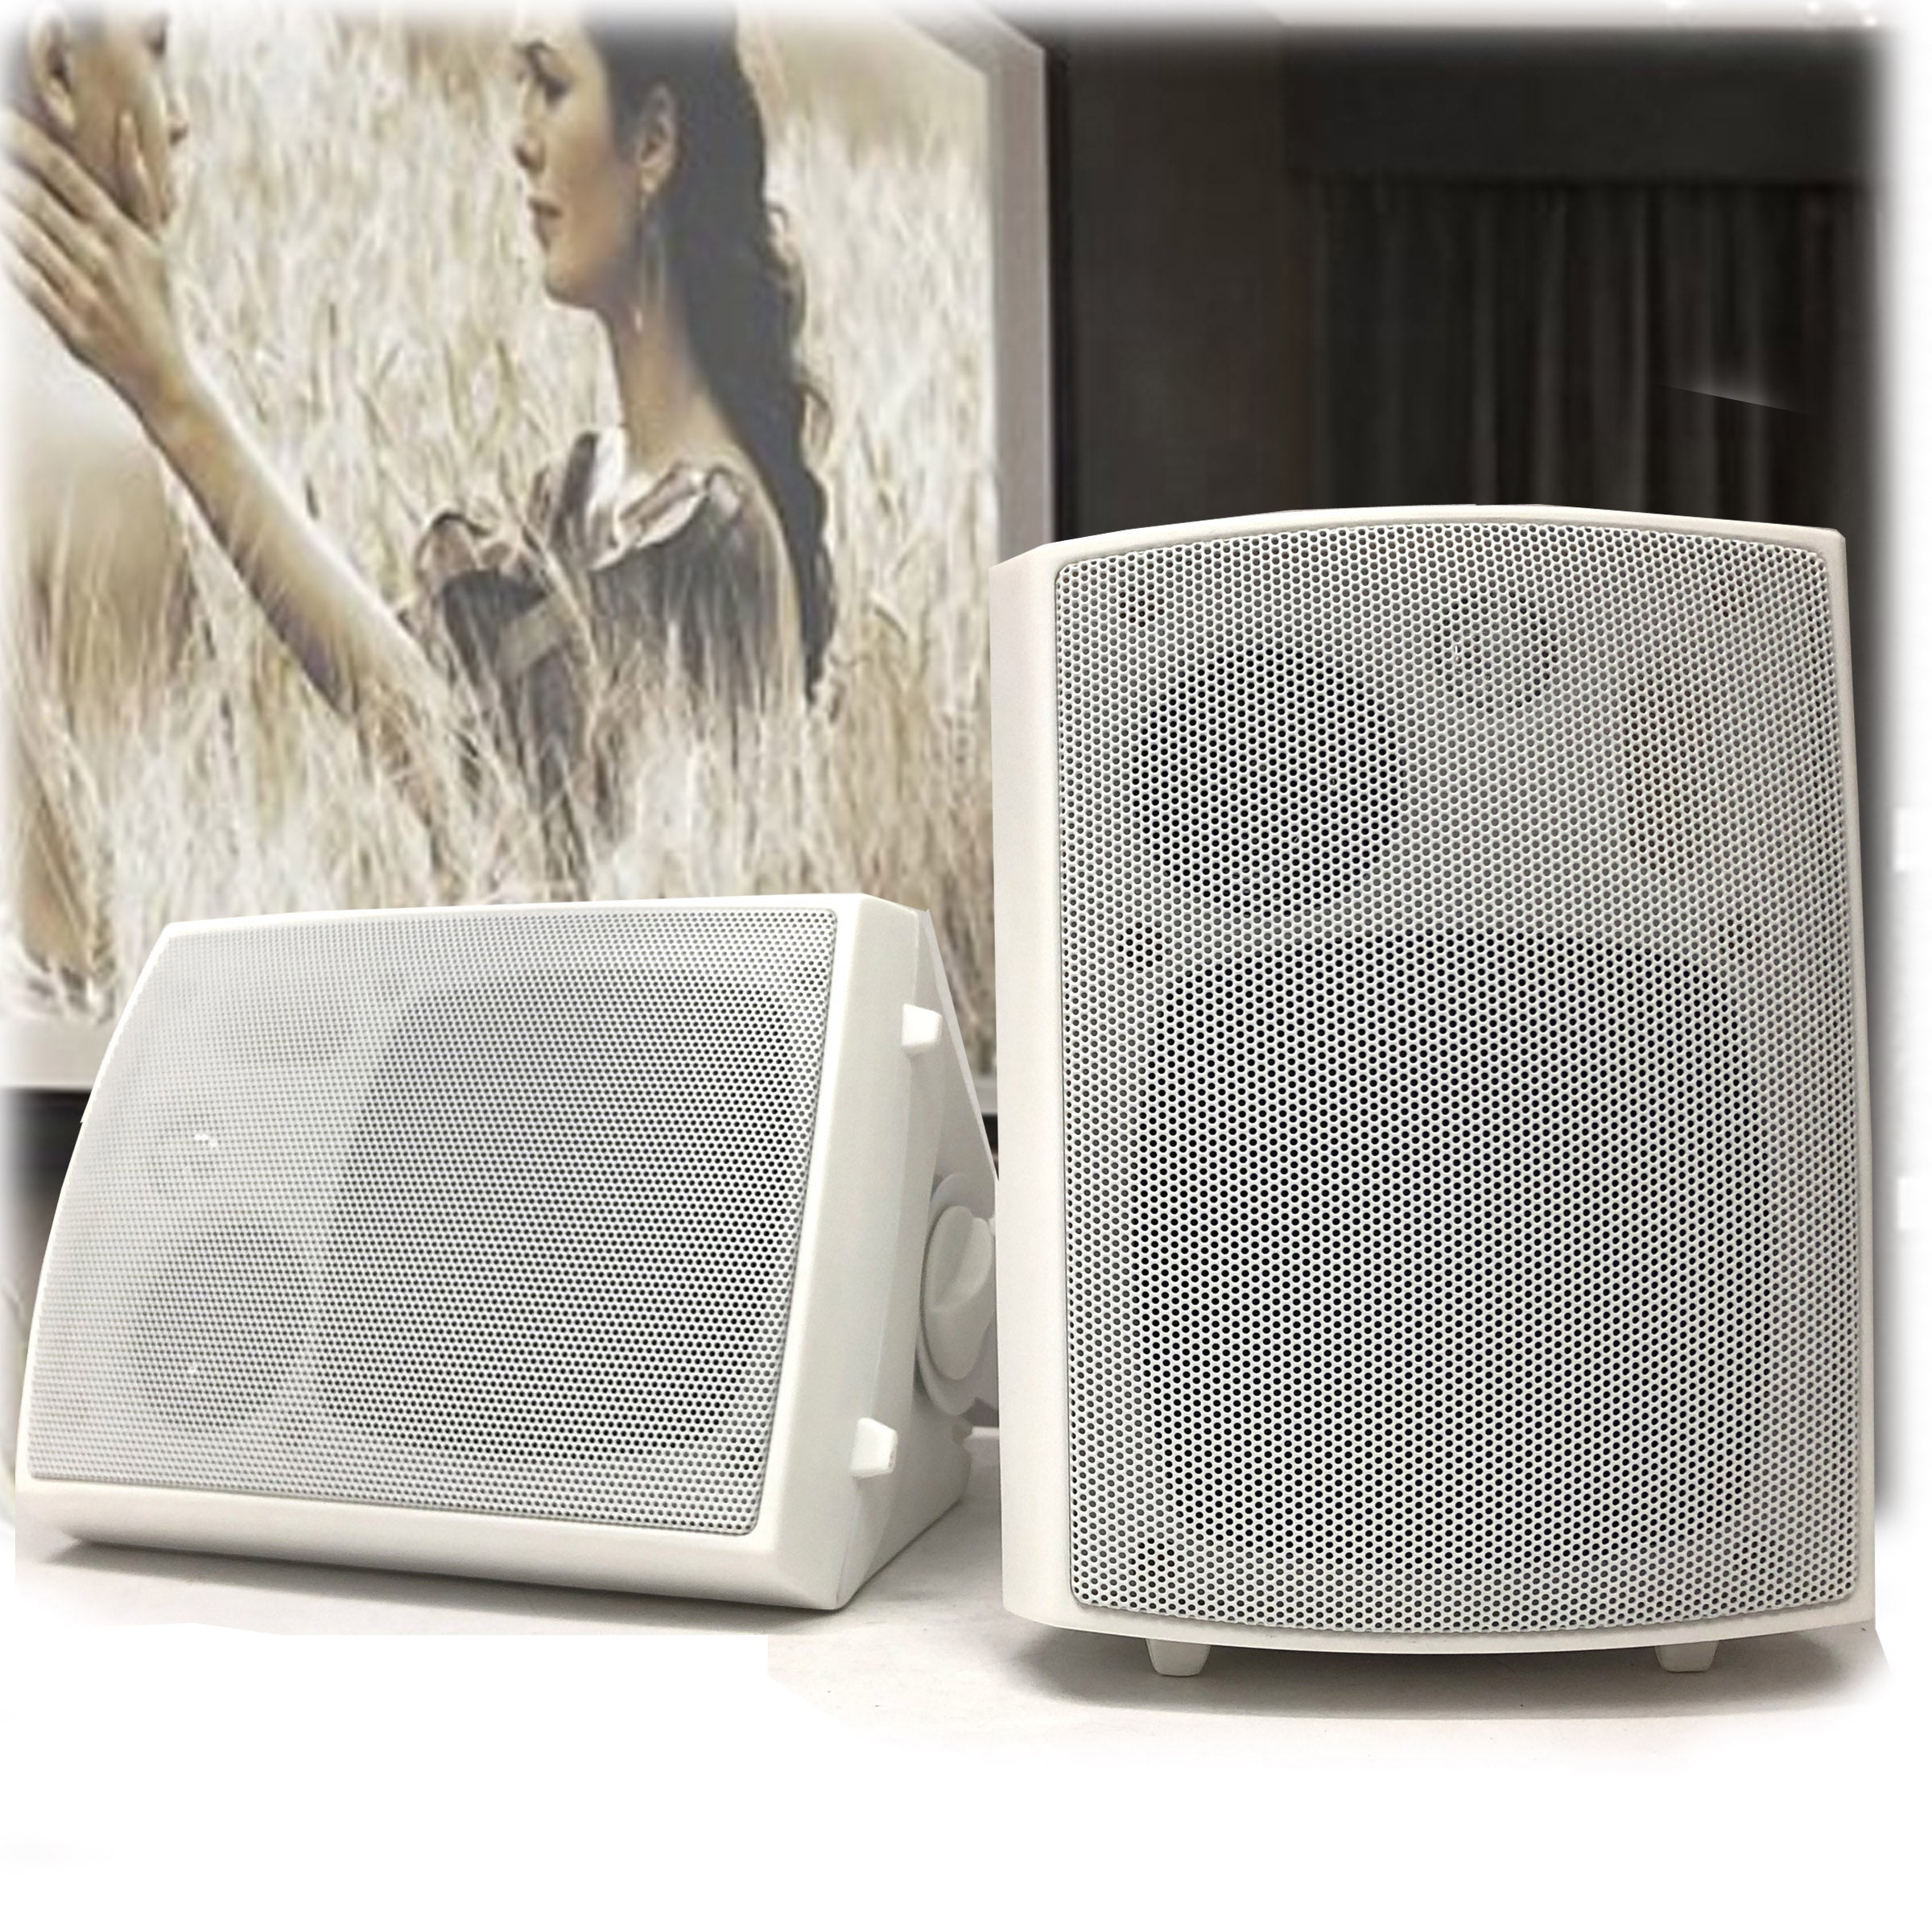 New Audioline Indoor Outdoor Speaker Pair 3-Way 4\" Bookshelf Wall / Ceiling Mount - SILBERSHELL